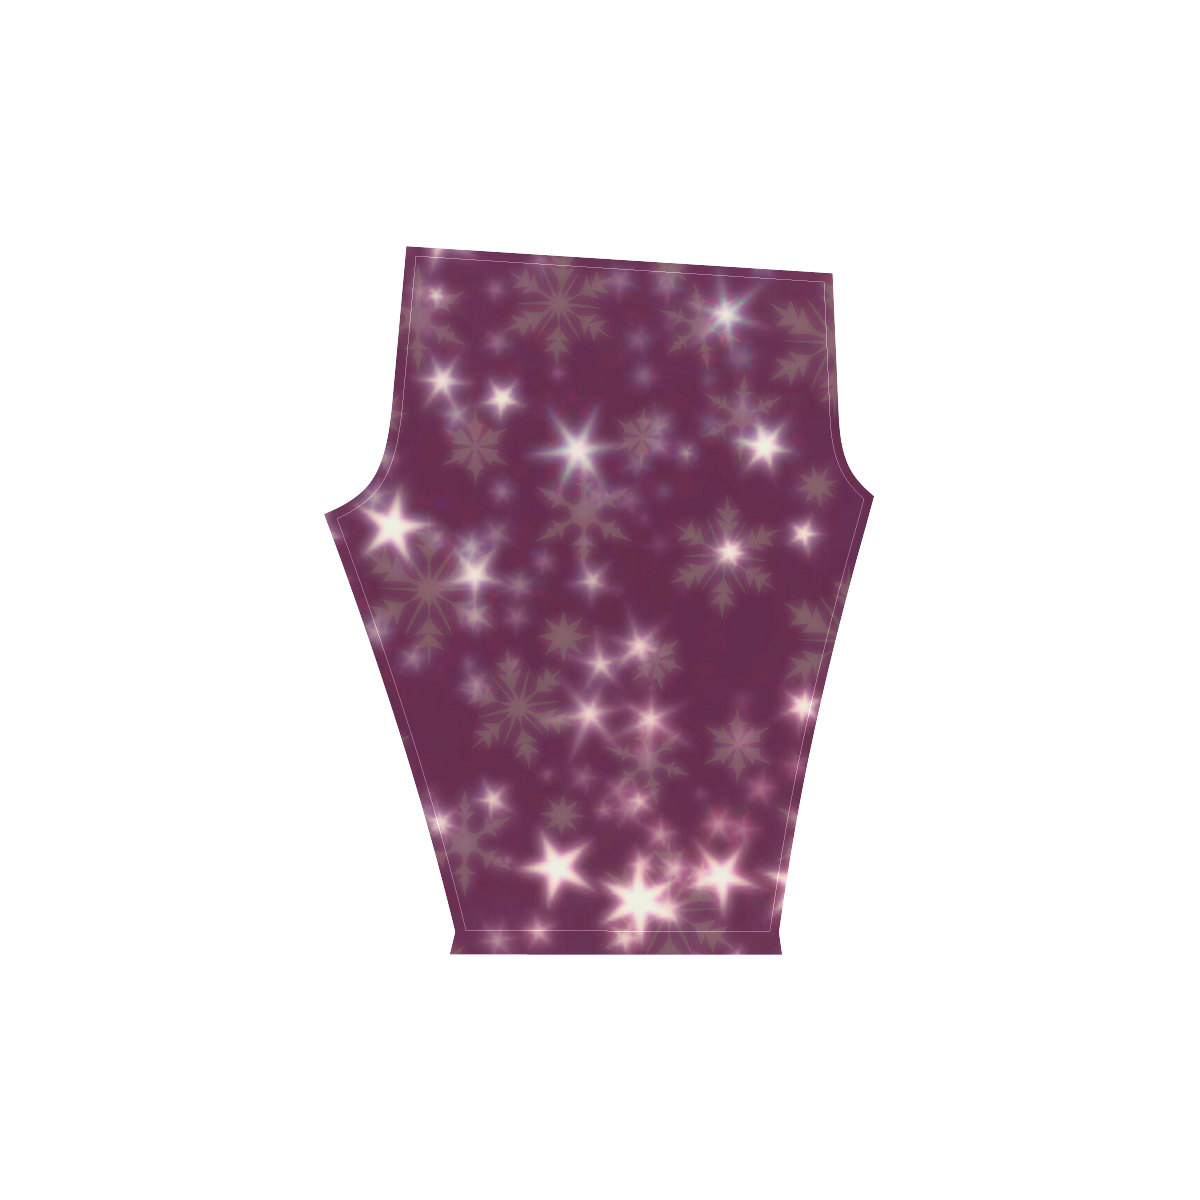 Blurry Stars plum by FeelGood Women's Low Rise Capri Leggings (Invisible Stitch) (Model L08)